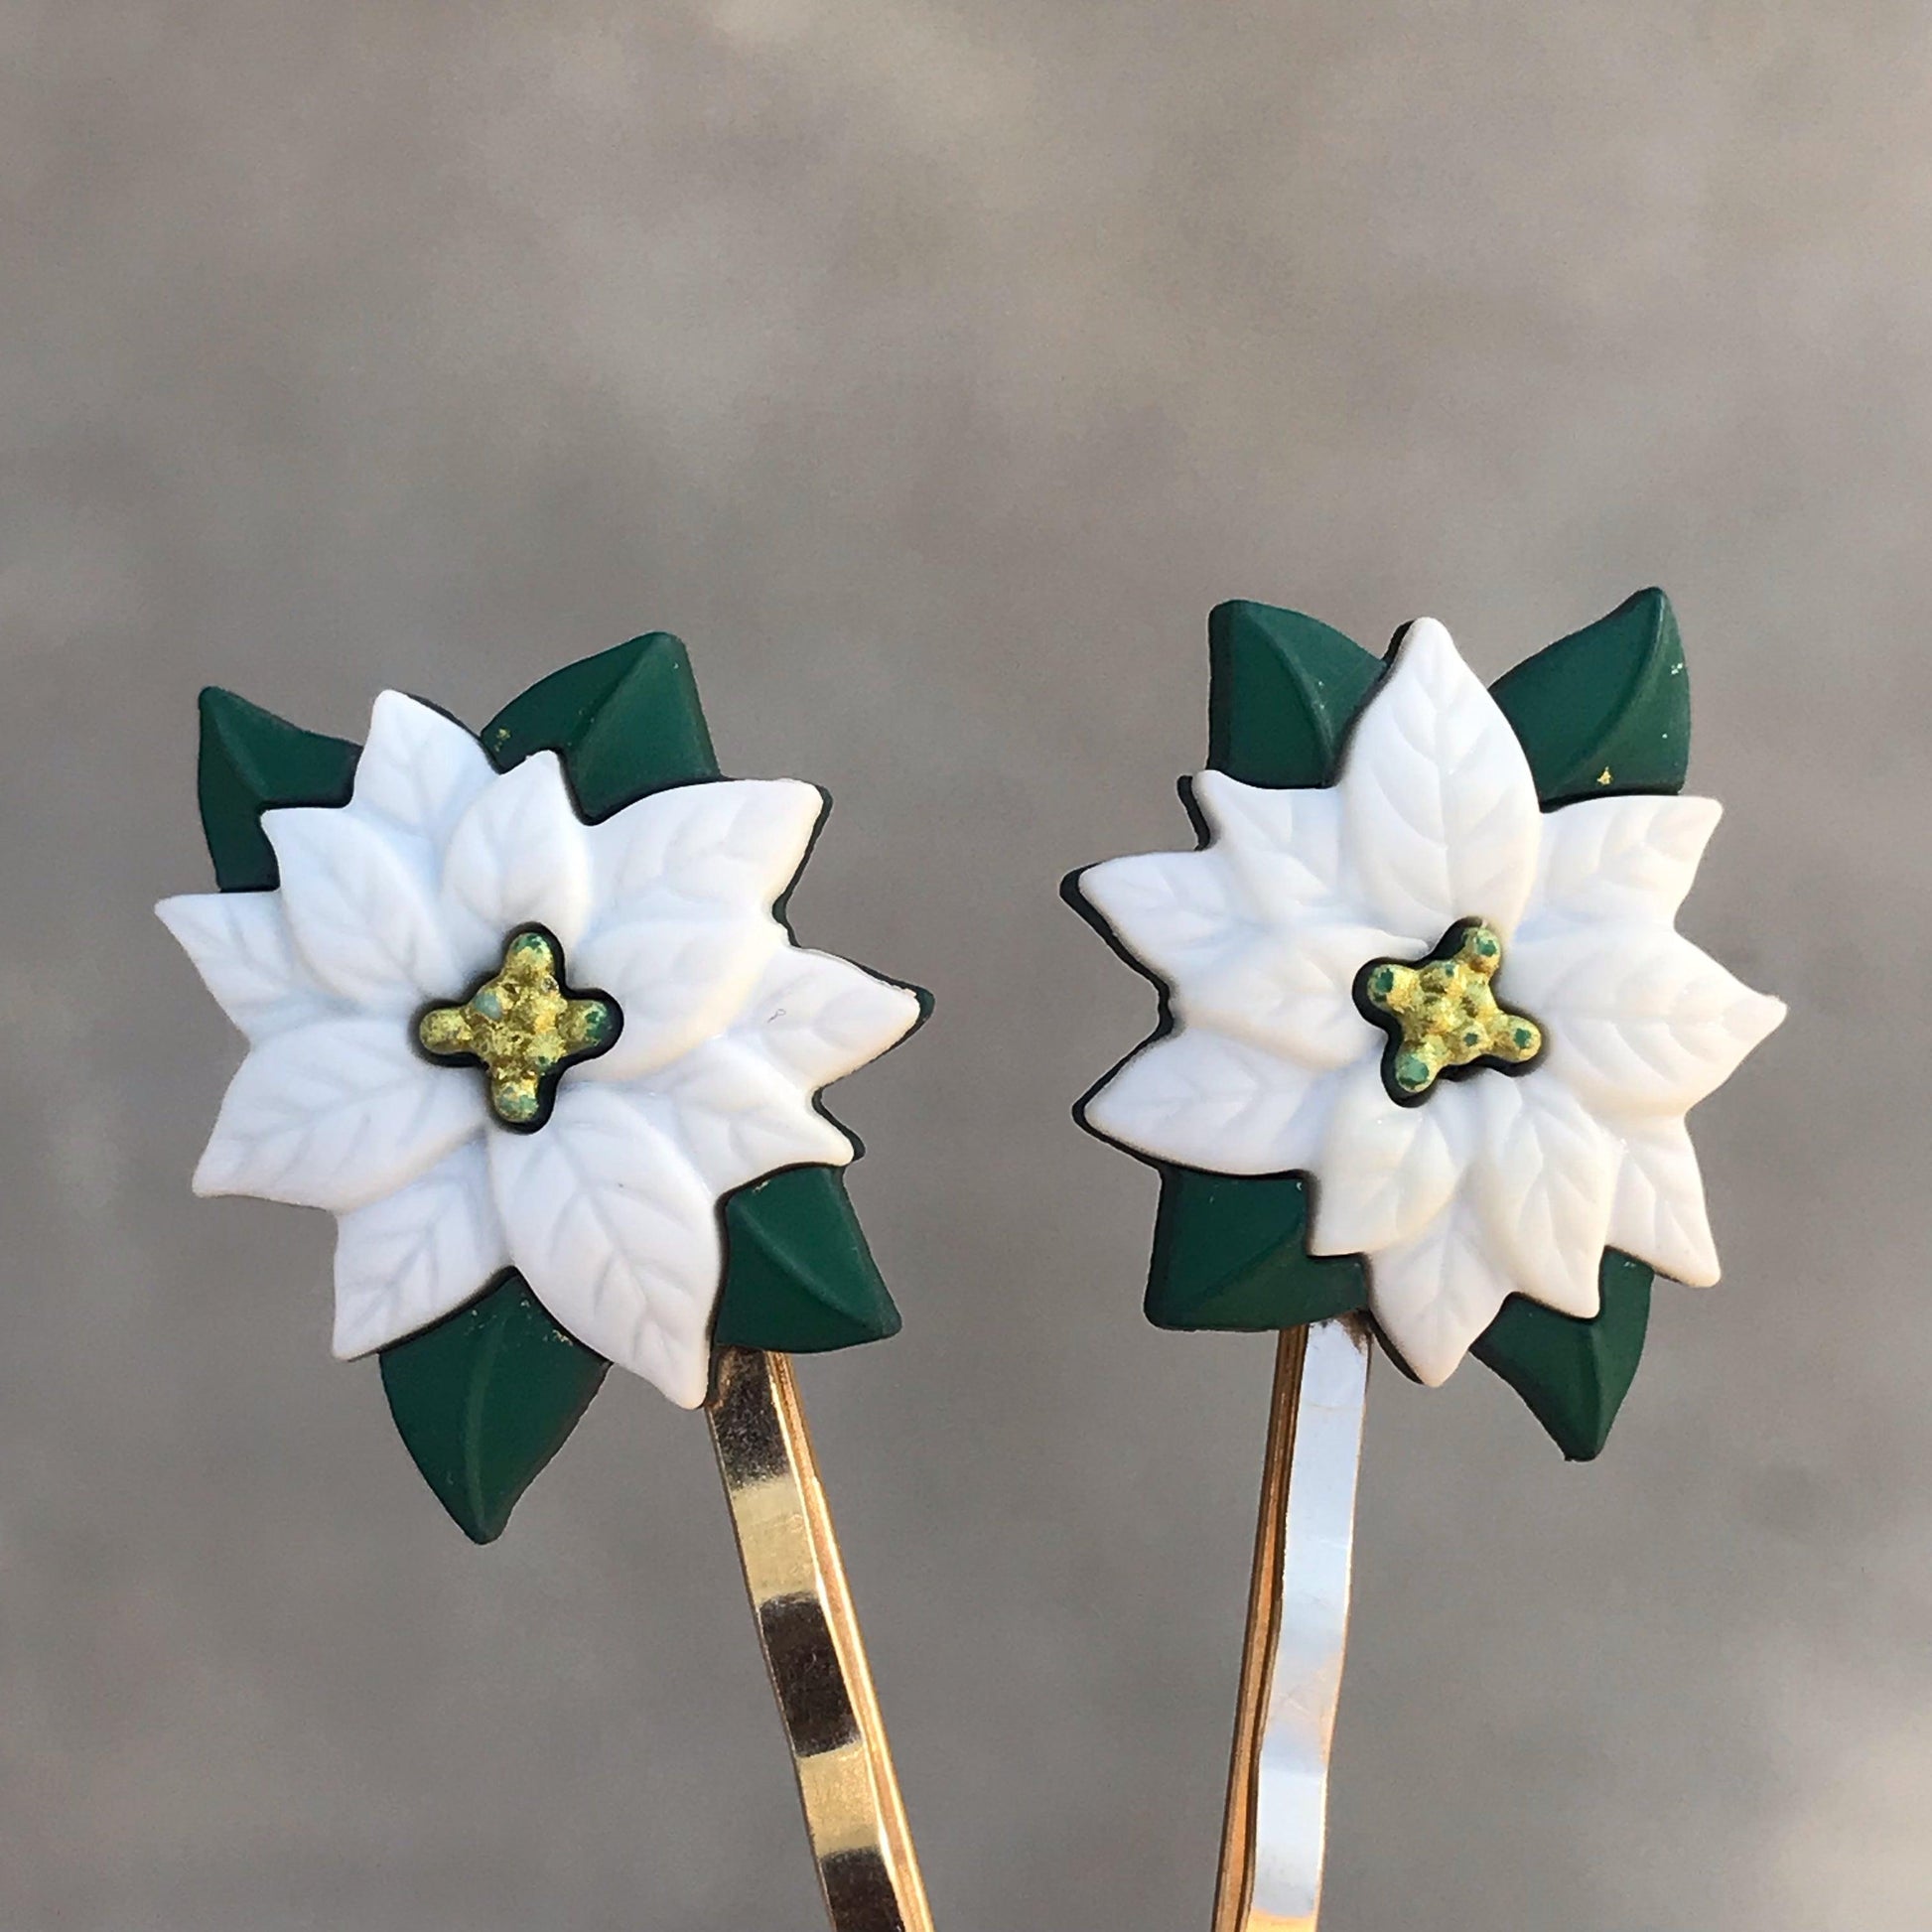 White Flower Chrysanthemum Hair Pins - Festive Christmas Holiday Accessories